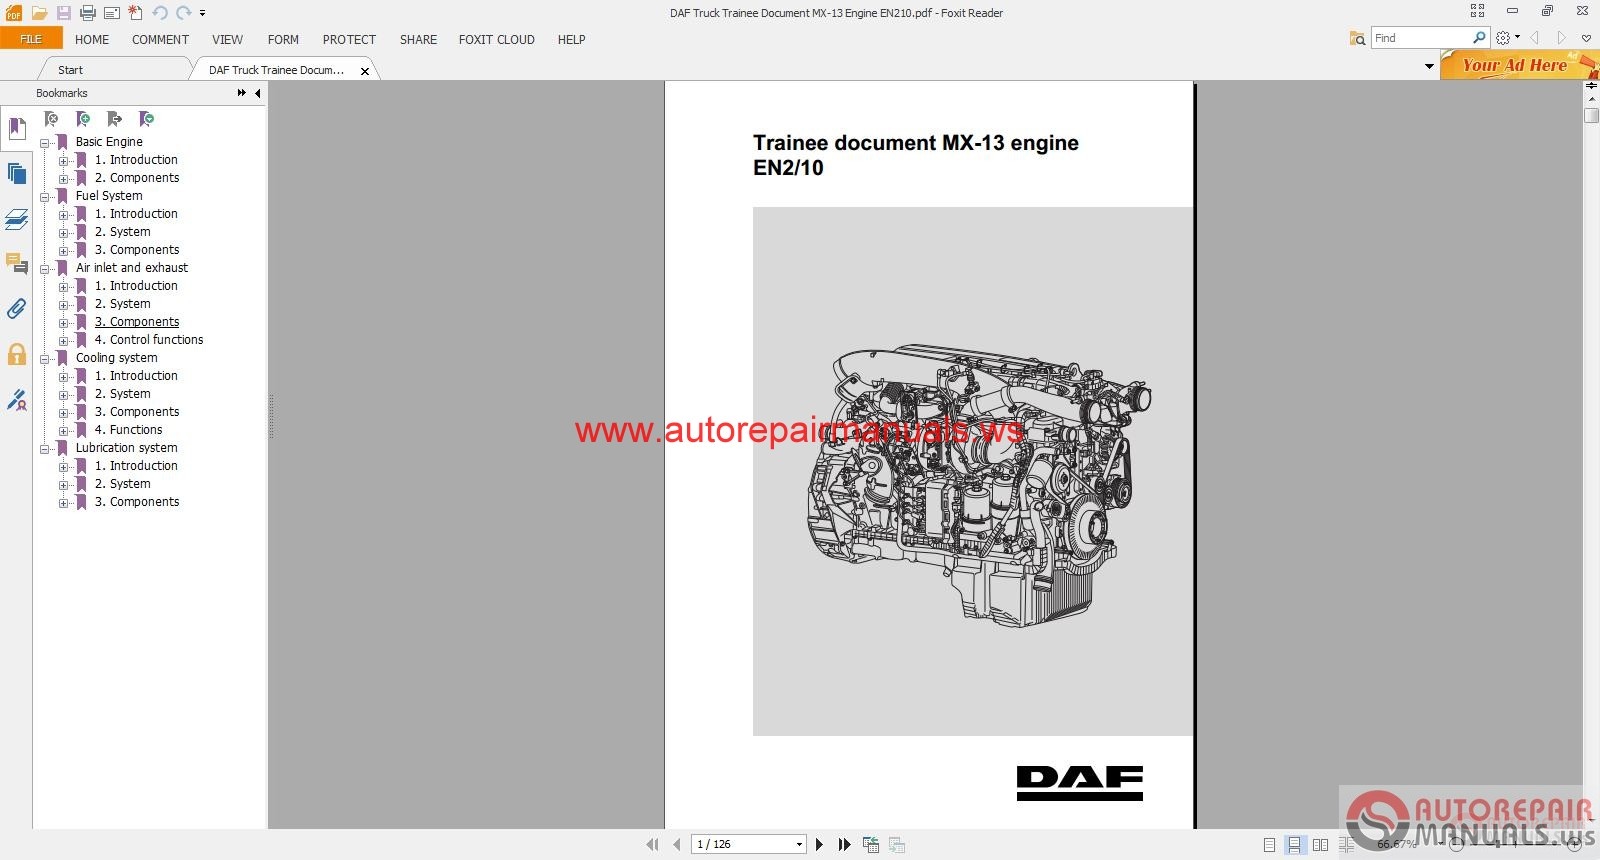 DAF Truck Trainee Document MX-13 Engine EN210 | Auto ...